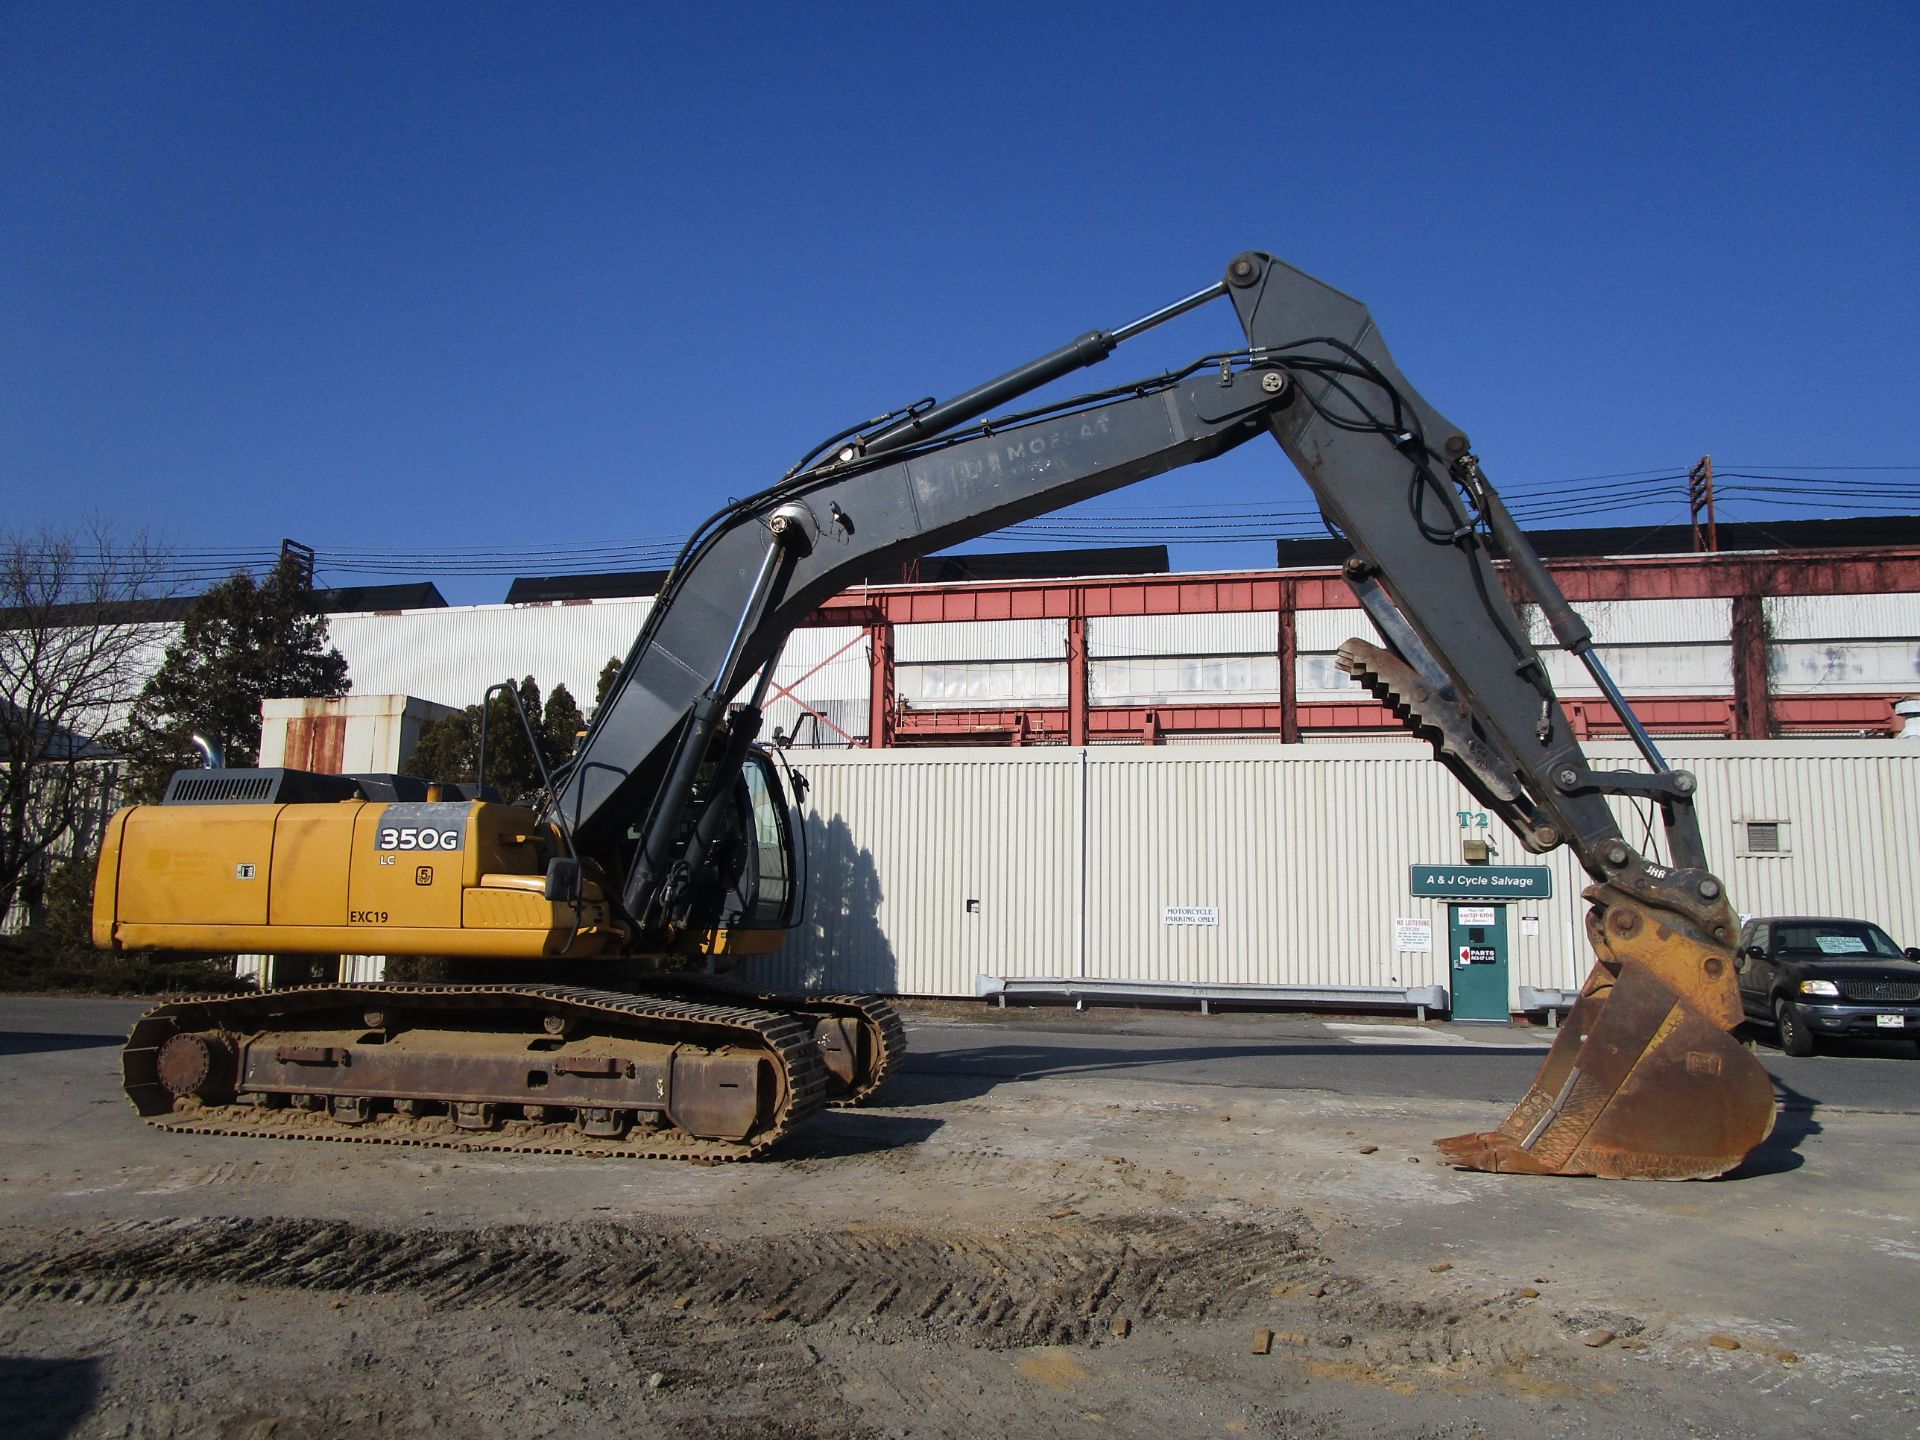 2013 John Deere 350G Track Excavator - Image 5 of 17